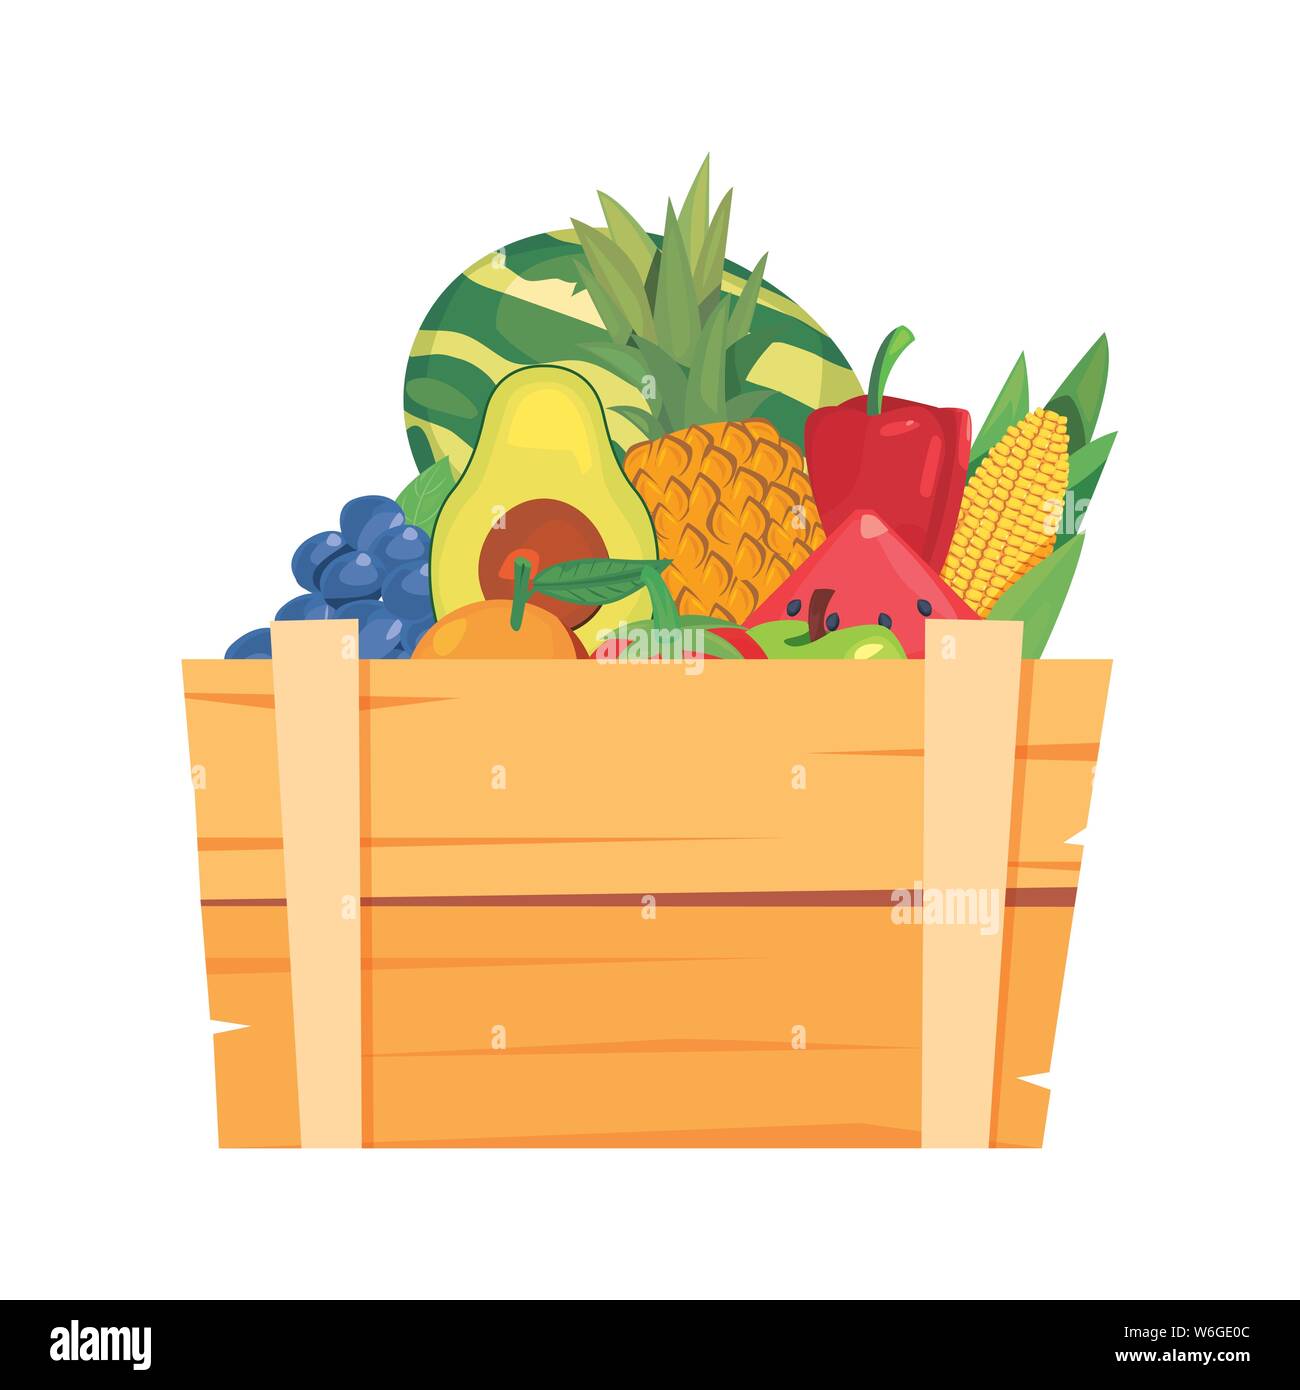 https://c8.alamy.com/comp/W6GE0C/fresh-vegetable-and-fruits-in-wooden-basket-vector-illustration-W6GE0C.jpg